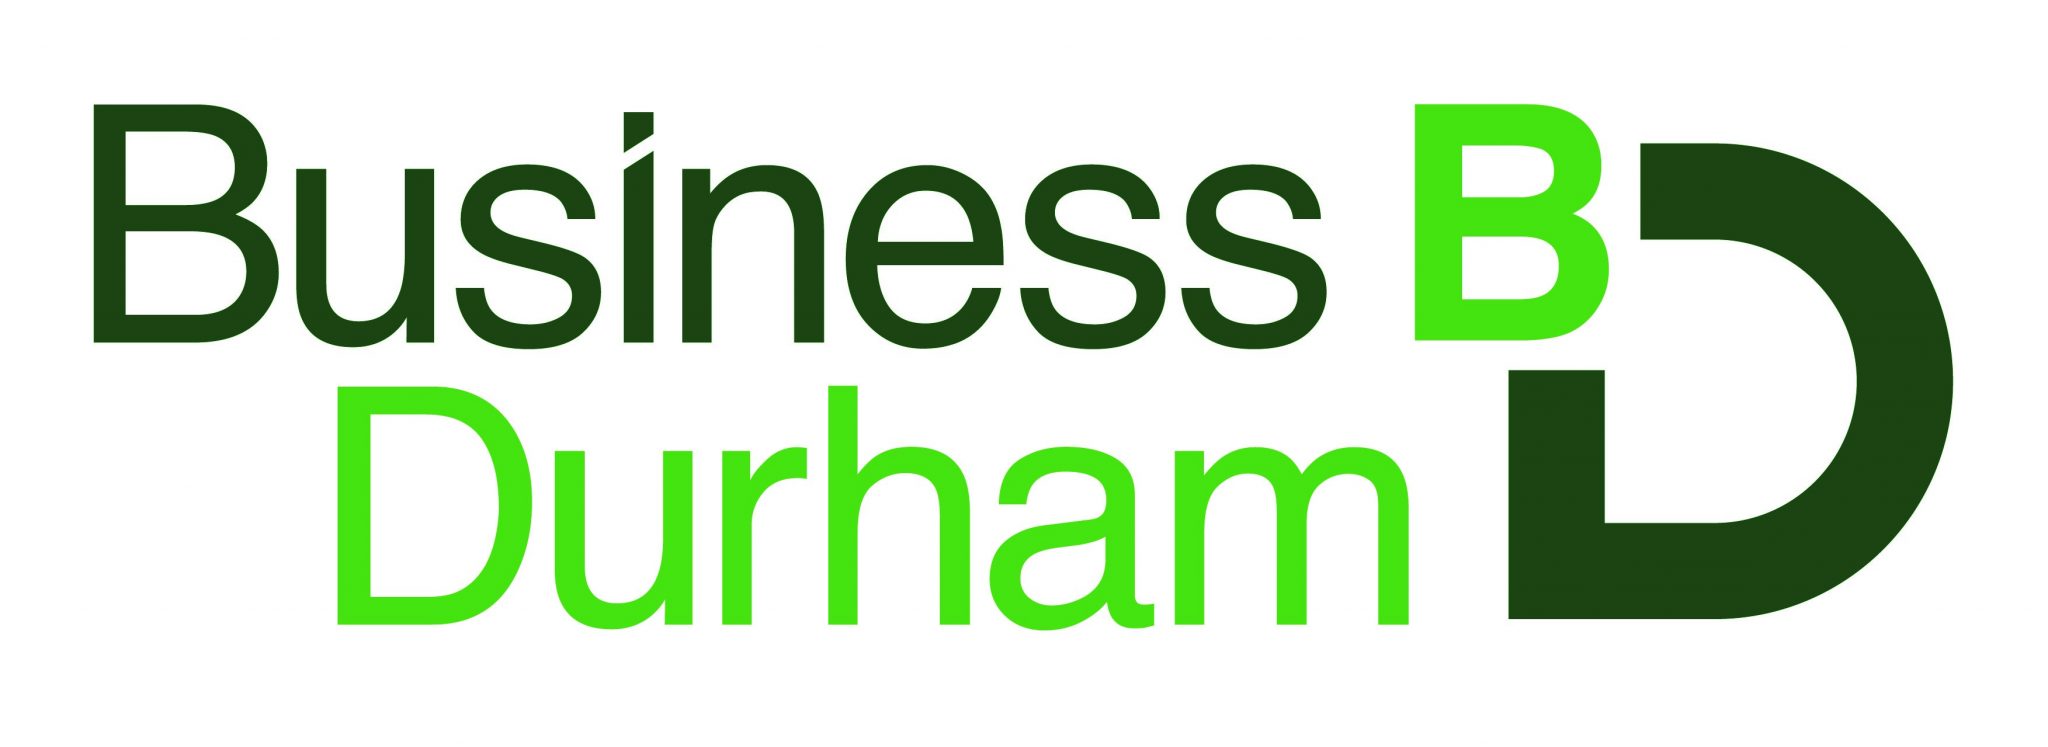 Multi-million pound business park development set to bring 2,500 jobs to County Durham